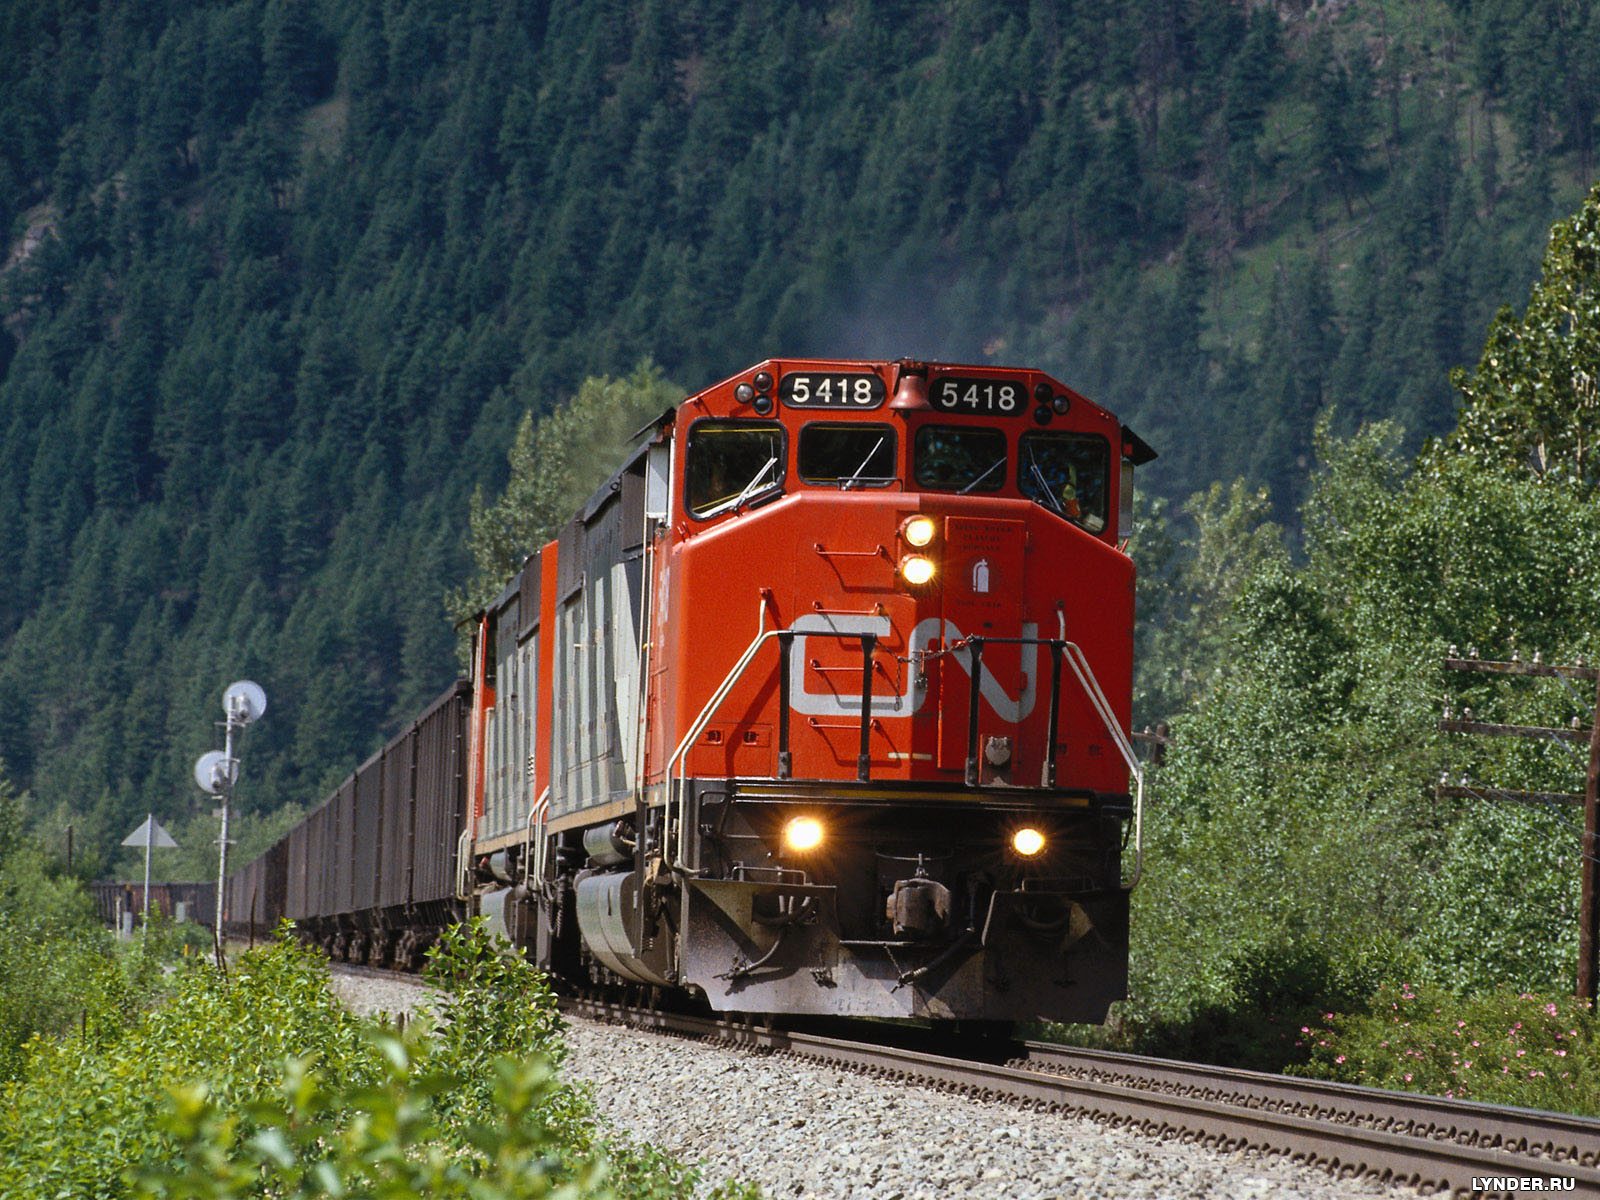 CN Rail invests $100 million in Northern Alberta